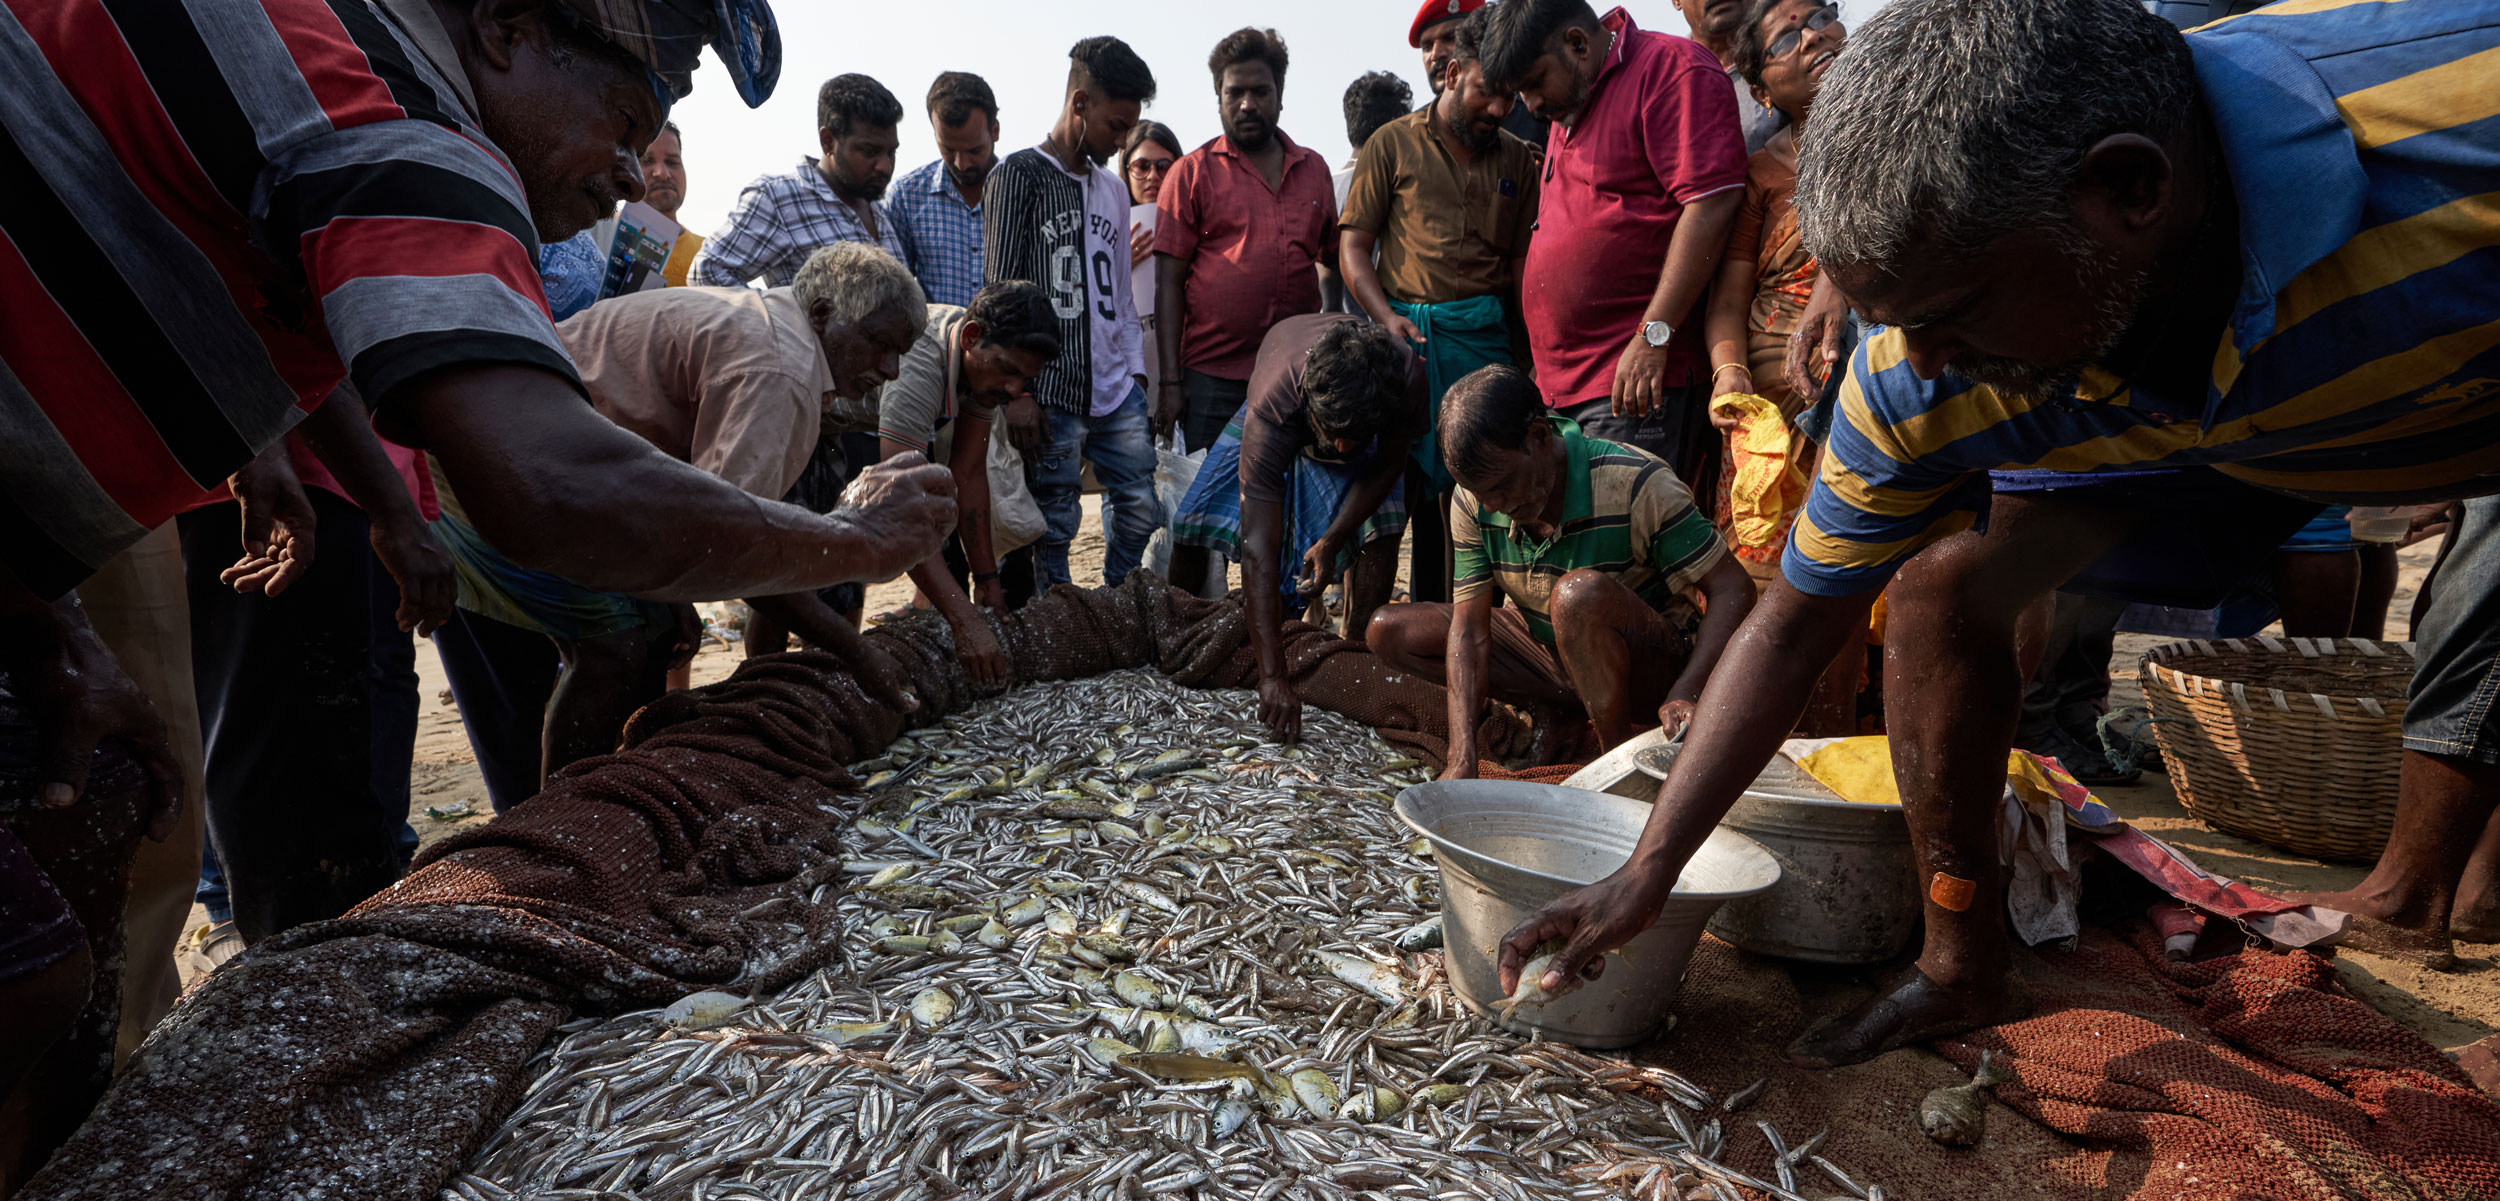 fishers sorting fish in Chennai, India